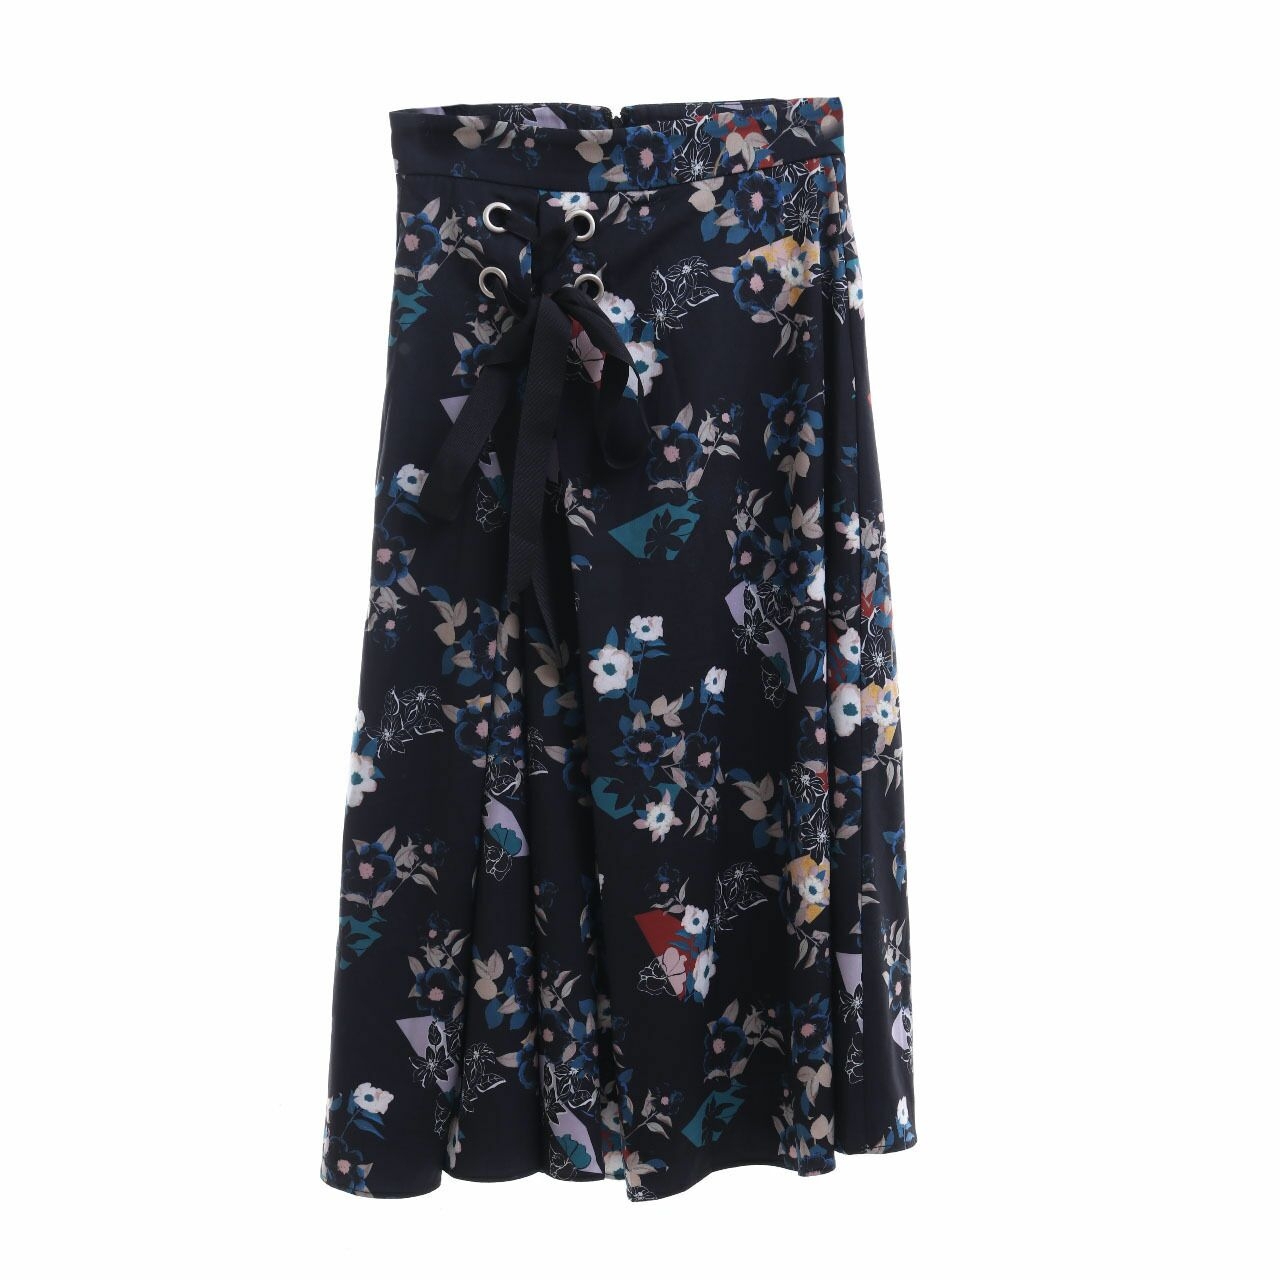 Lily Black Floral Midi Skirt